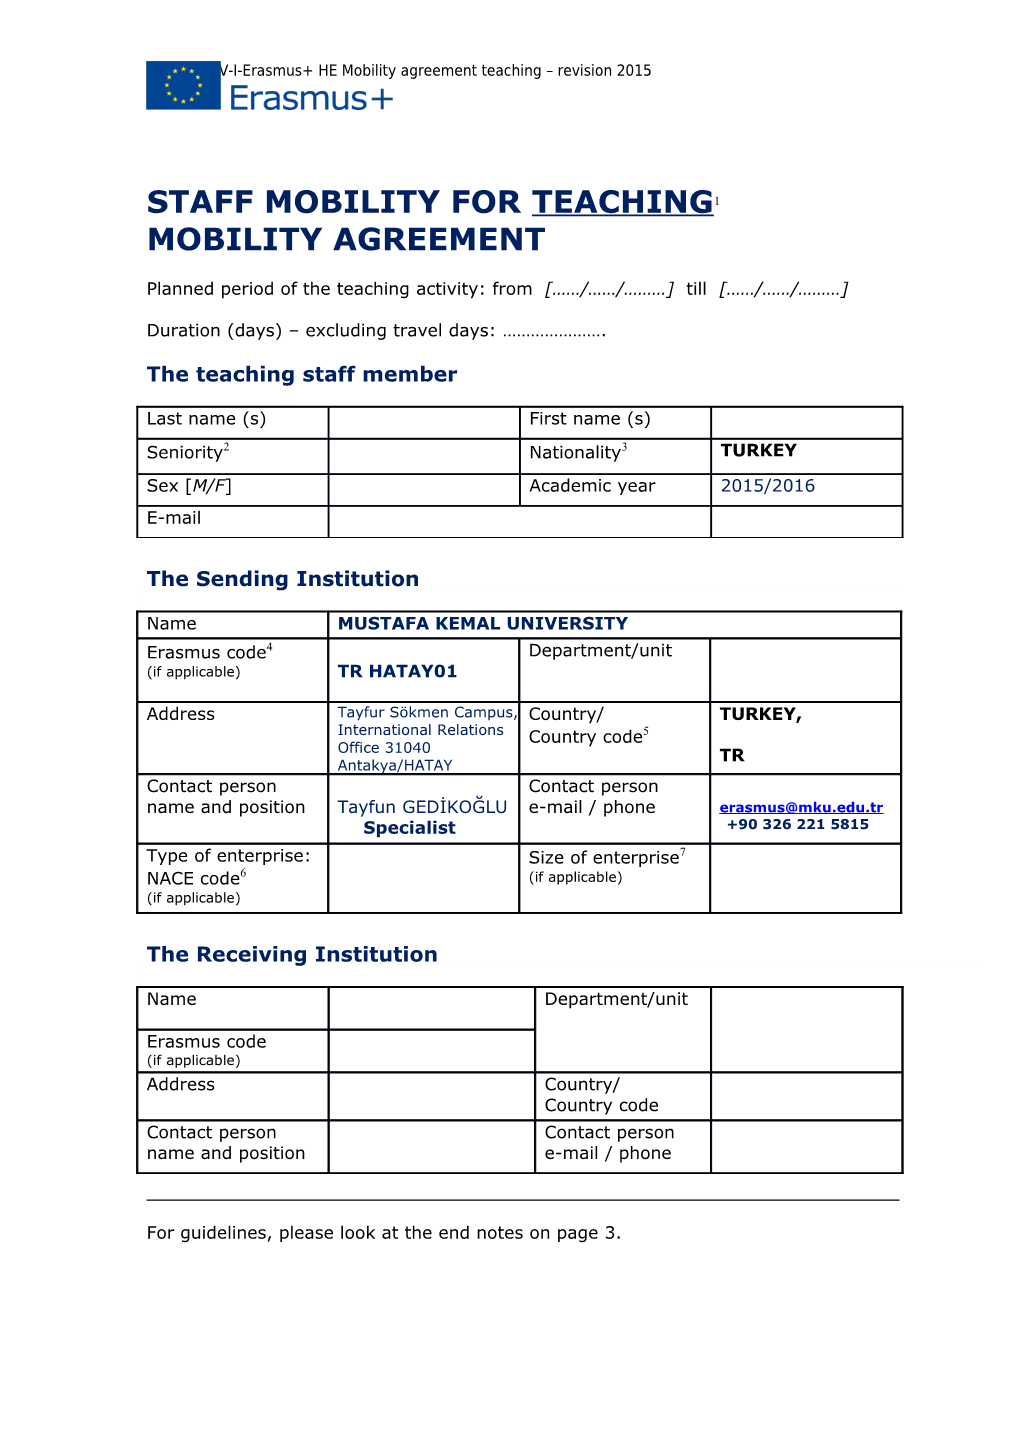 Gfna-II-B-IV-I-Erasmus+ HE Mobility Agreement Teaching Revision 2015